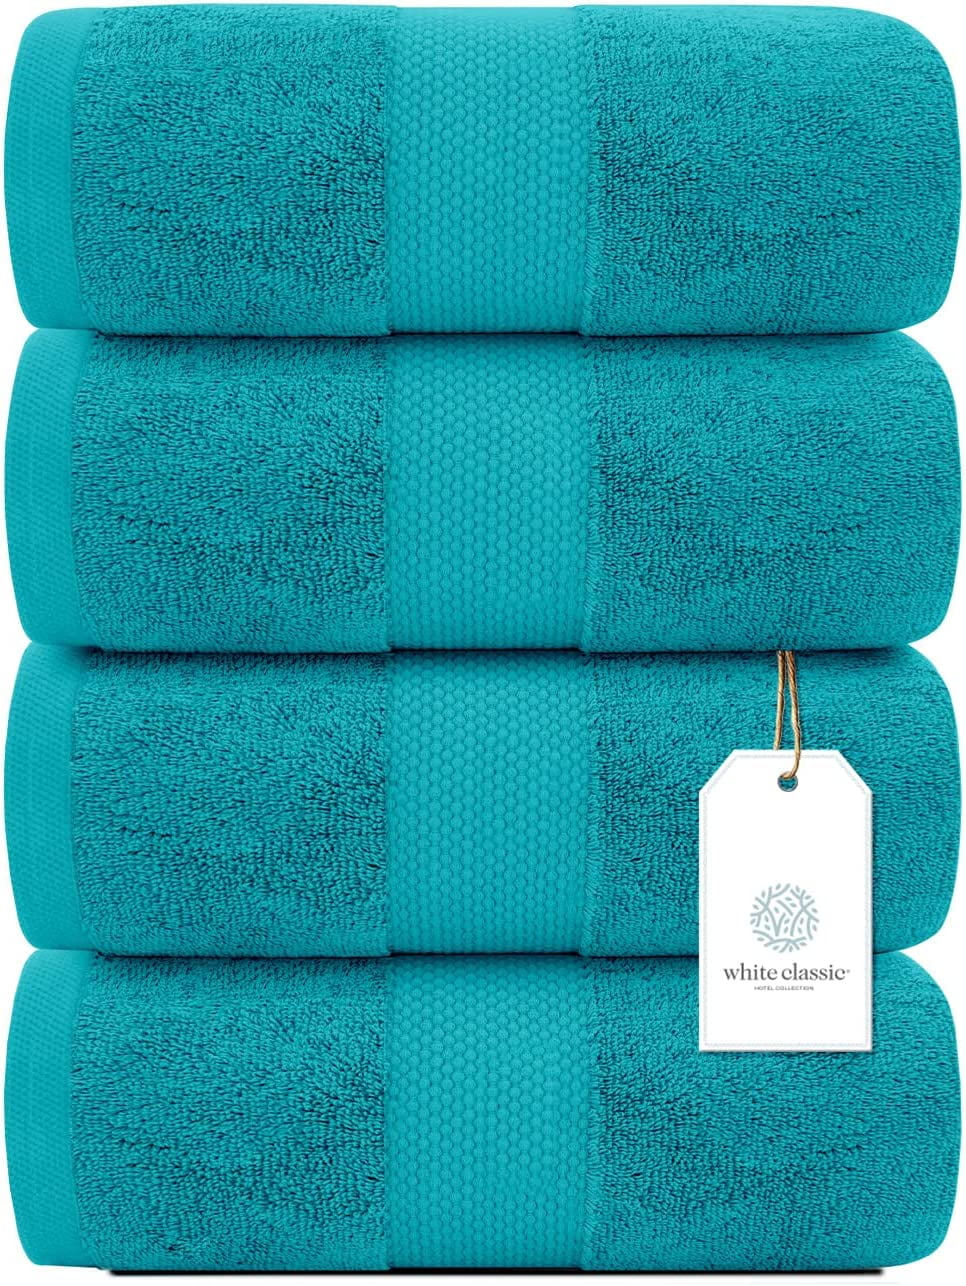 70X140CM100％Cotton Classic Luxury Bath Towels Hotel spa Bathroom Towel  Super Soft, Fluffy, and Absorbent